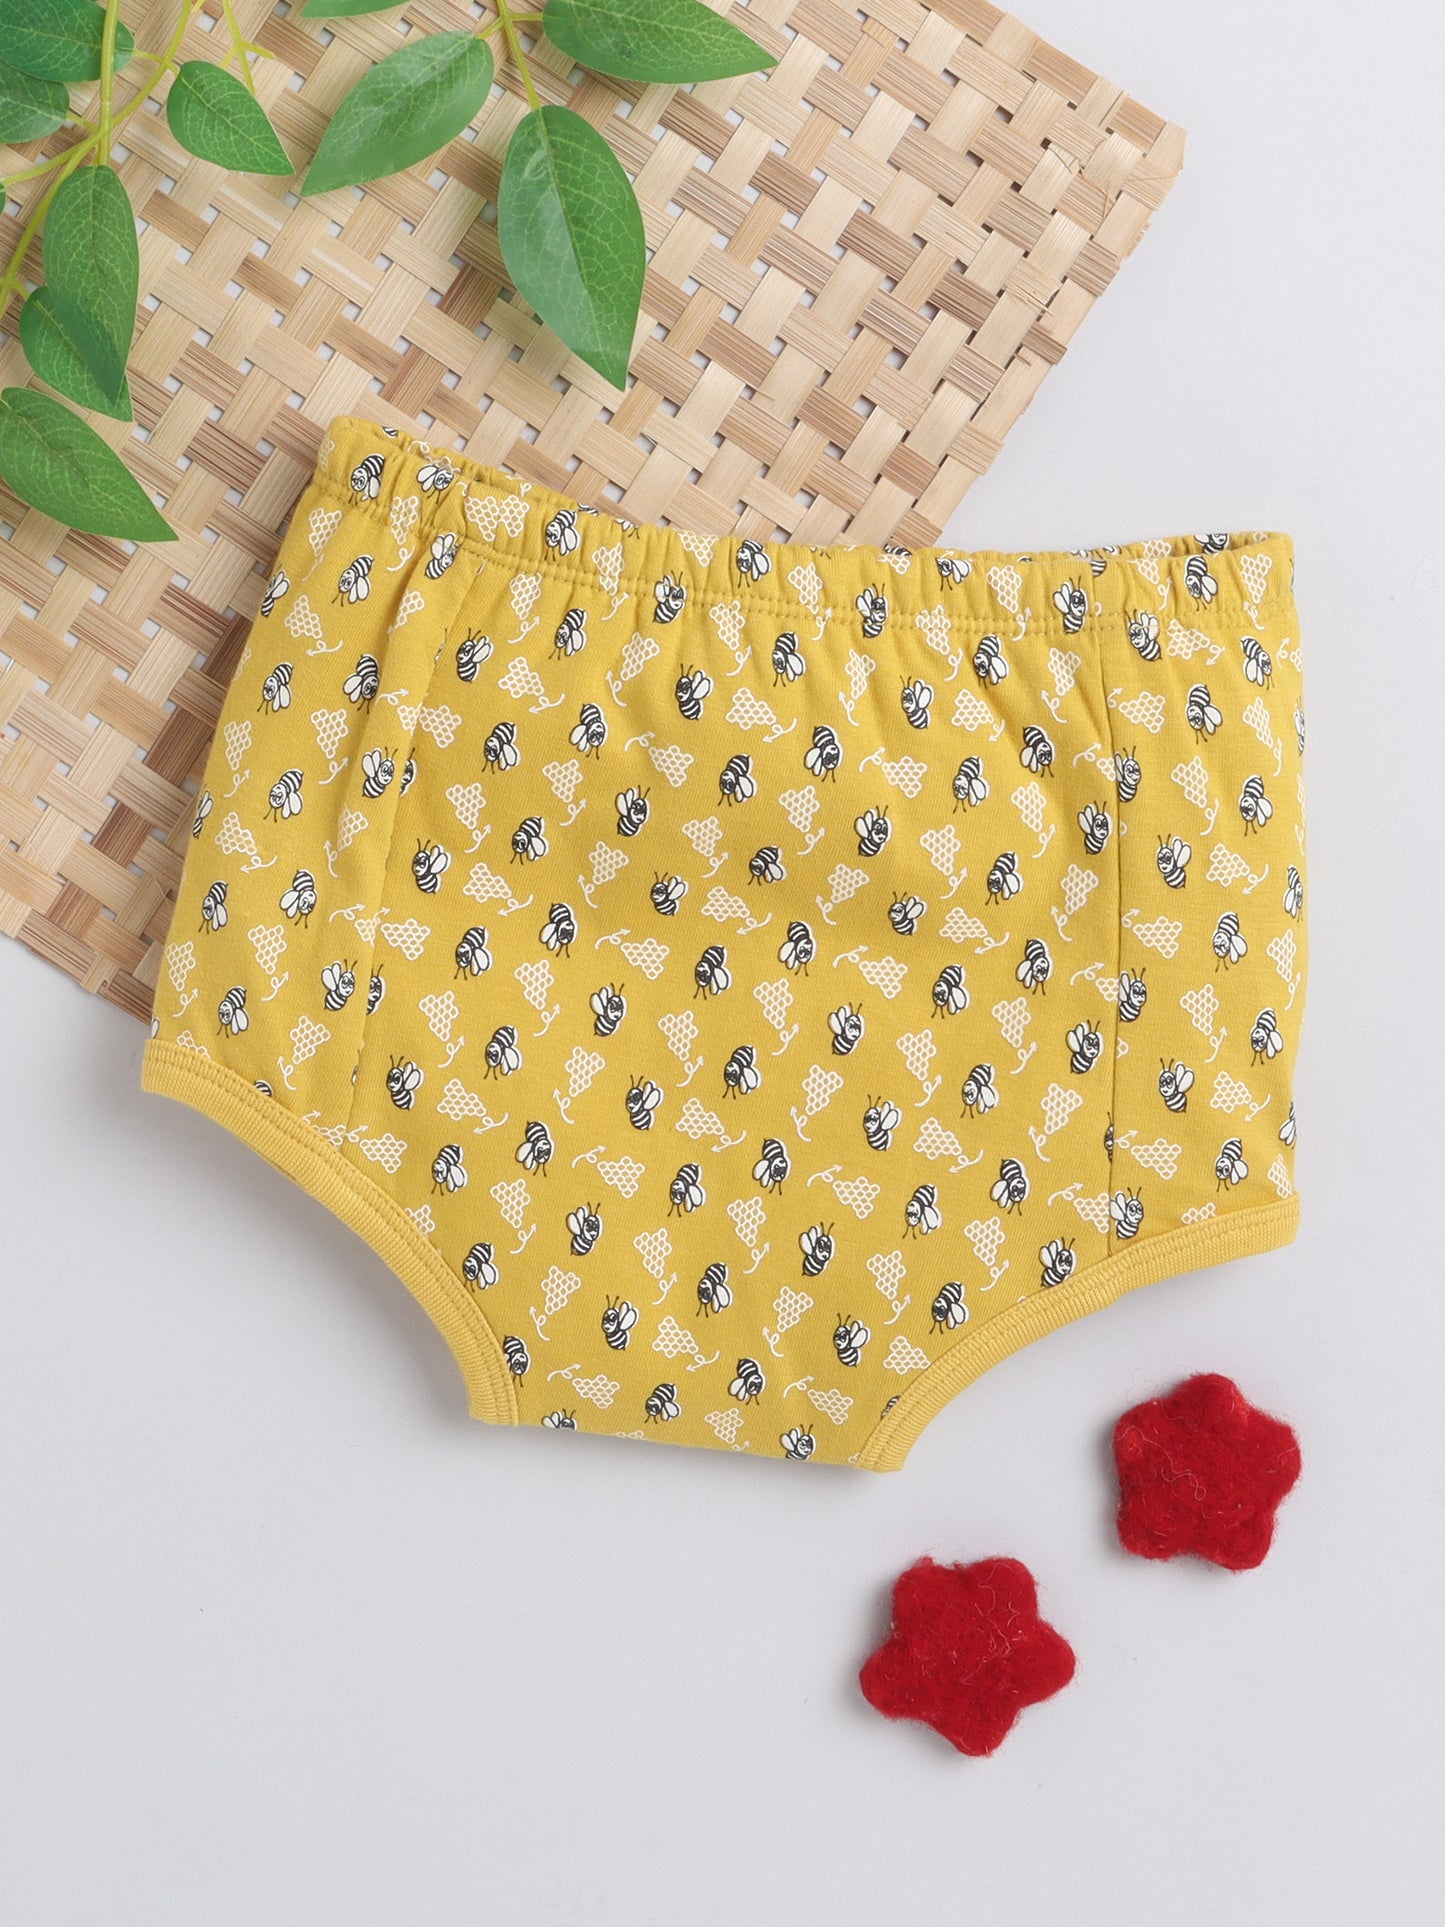 Cotton padded underwear mustard color